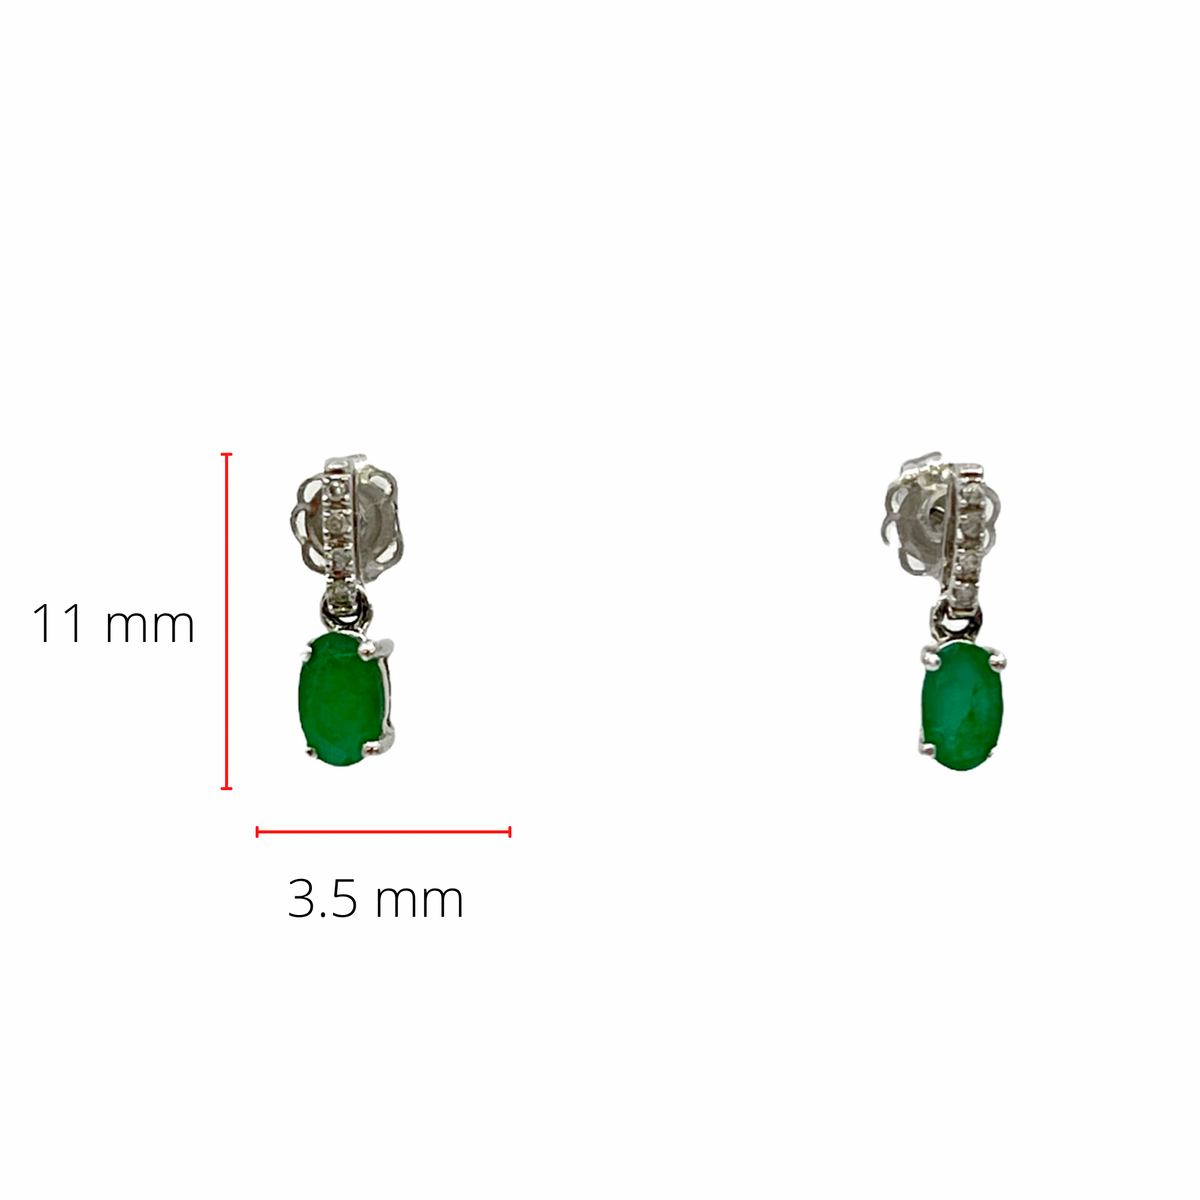 14K White Gold Emerald and Diamond Earrings